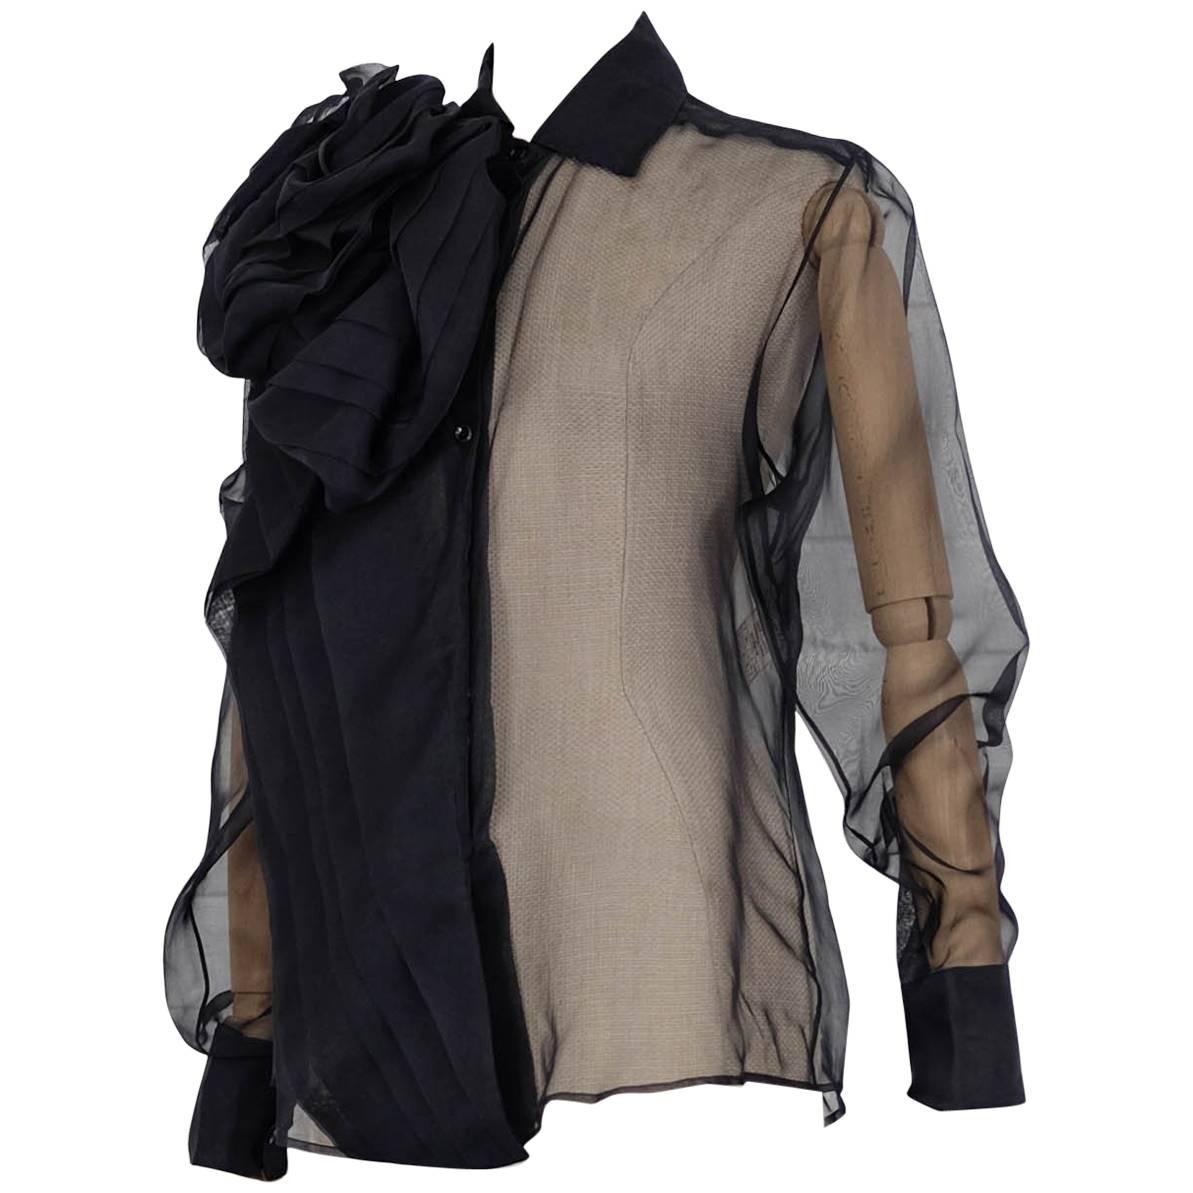 Circa 2004 CHRISTIAN DIOR by John Galliano black silk bow sheer blouse unworn For Sale